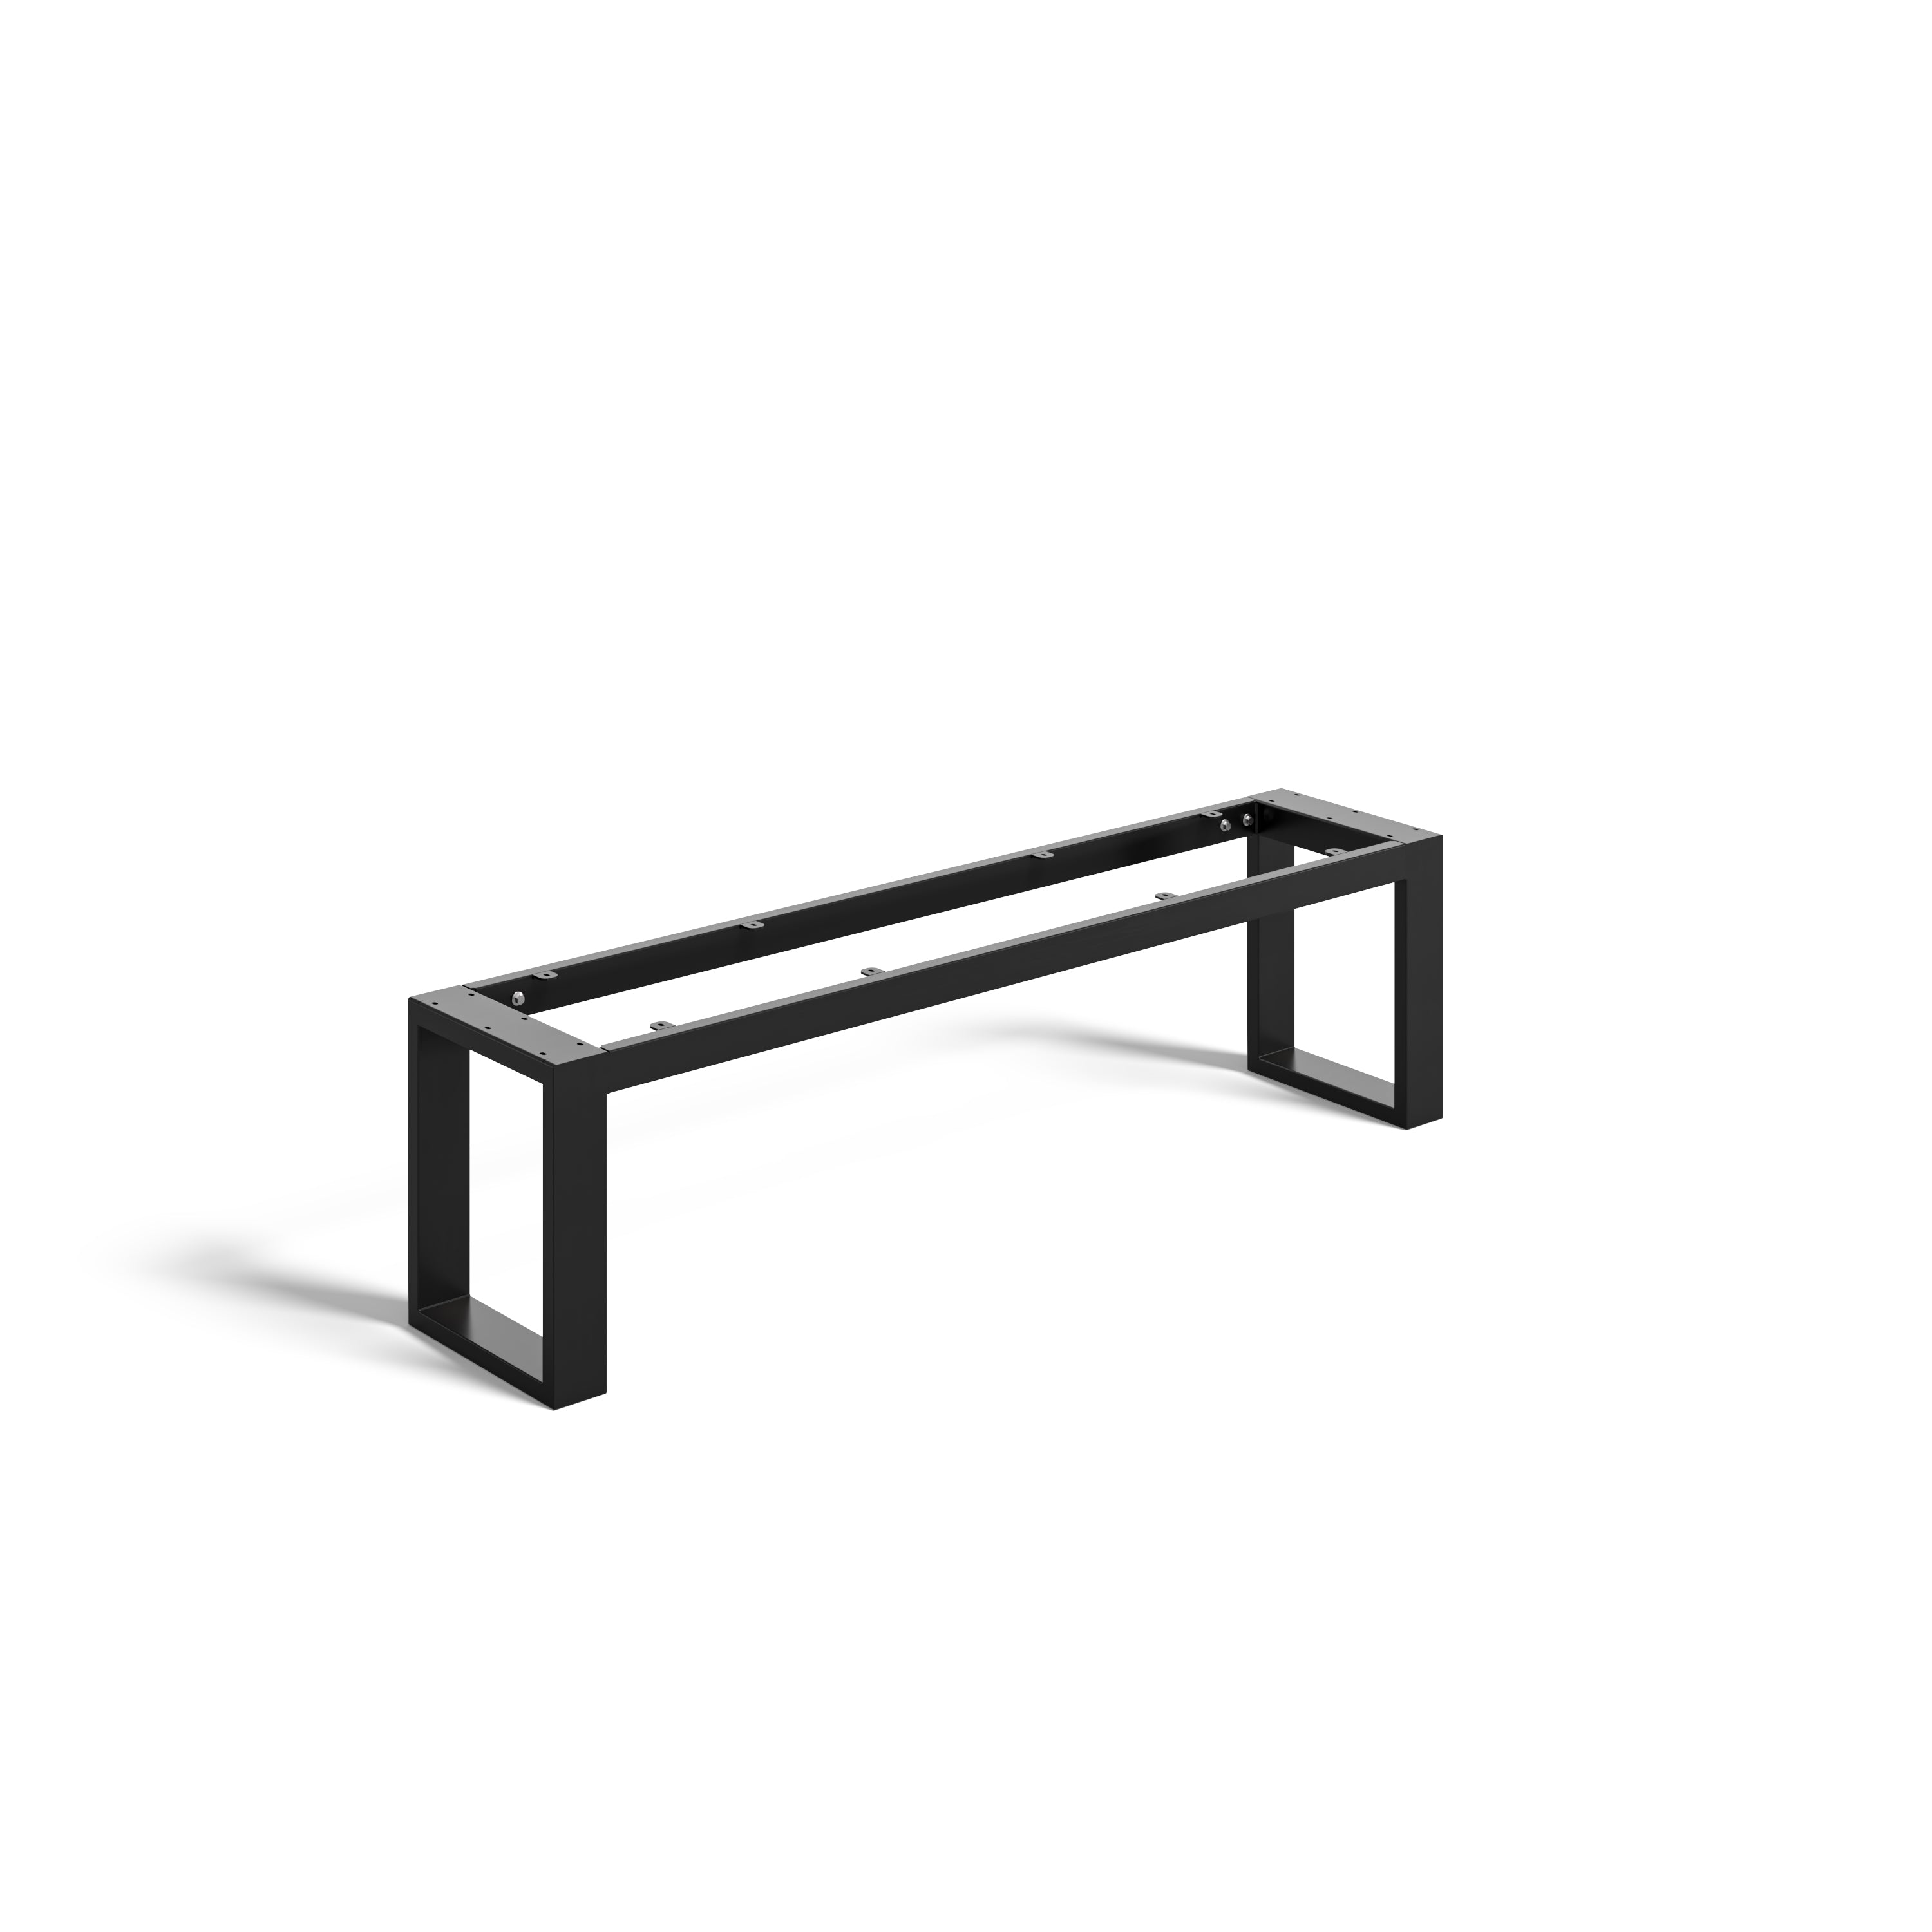 Square Industrial Frame | 40cm Bench